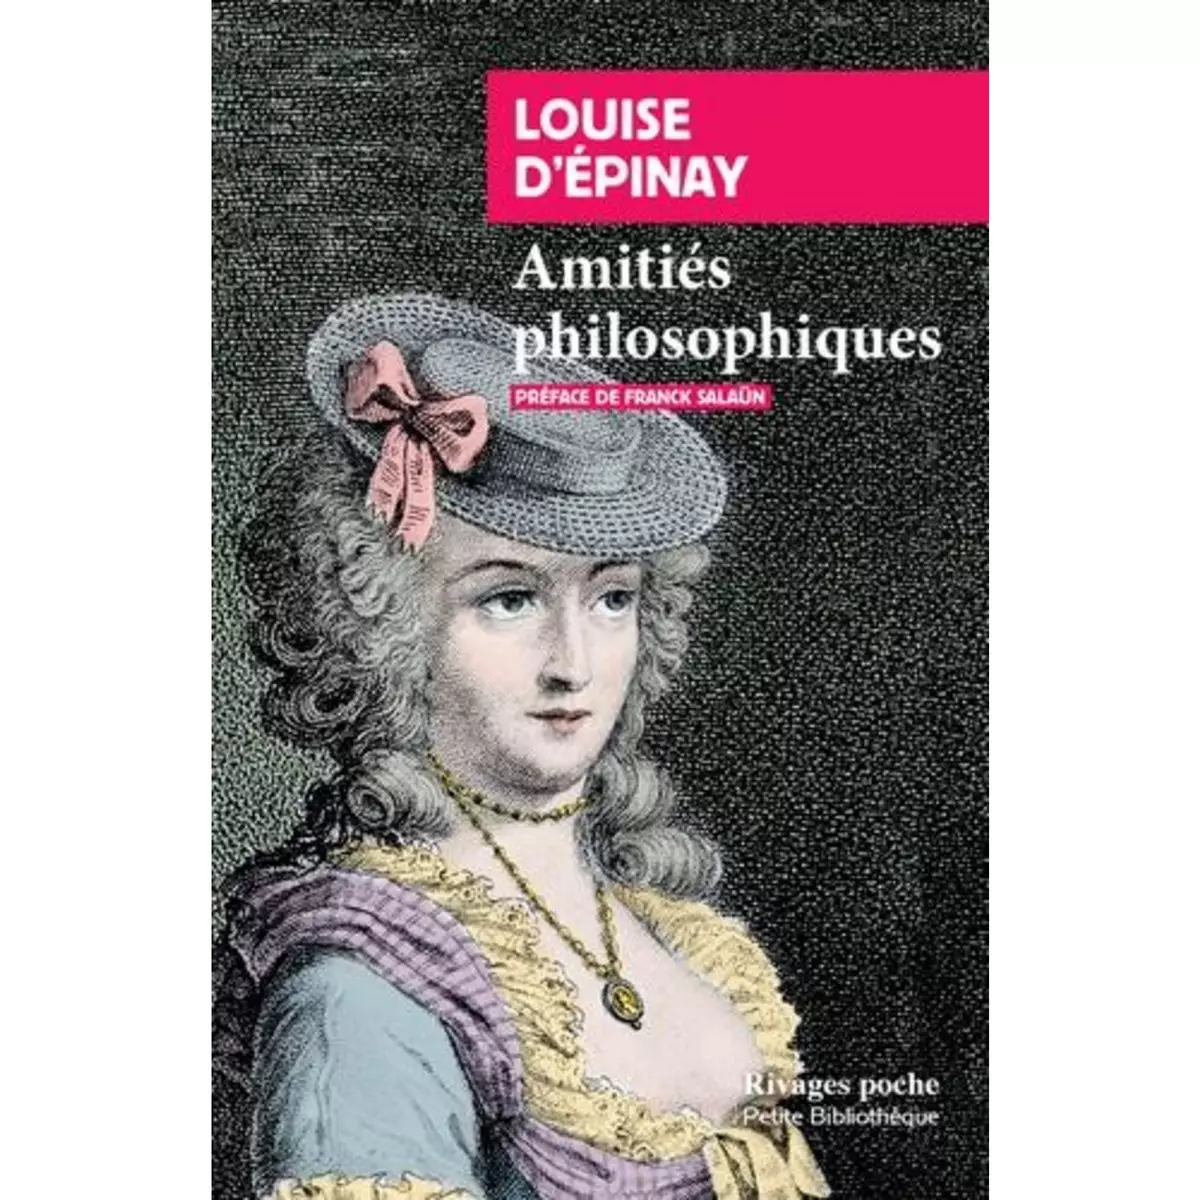  AMITIES PHILOSOPHIQUES, Madame d'Epinay